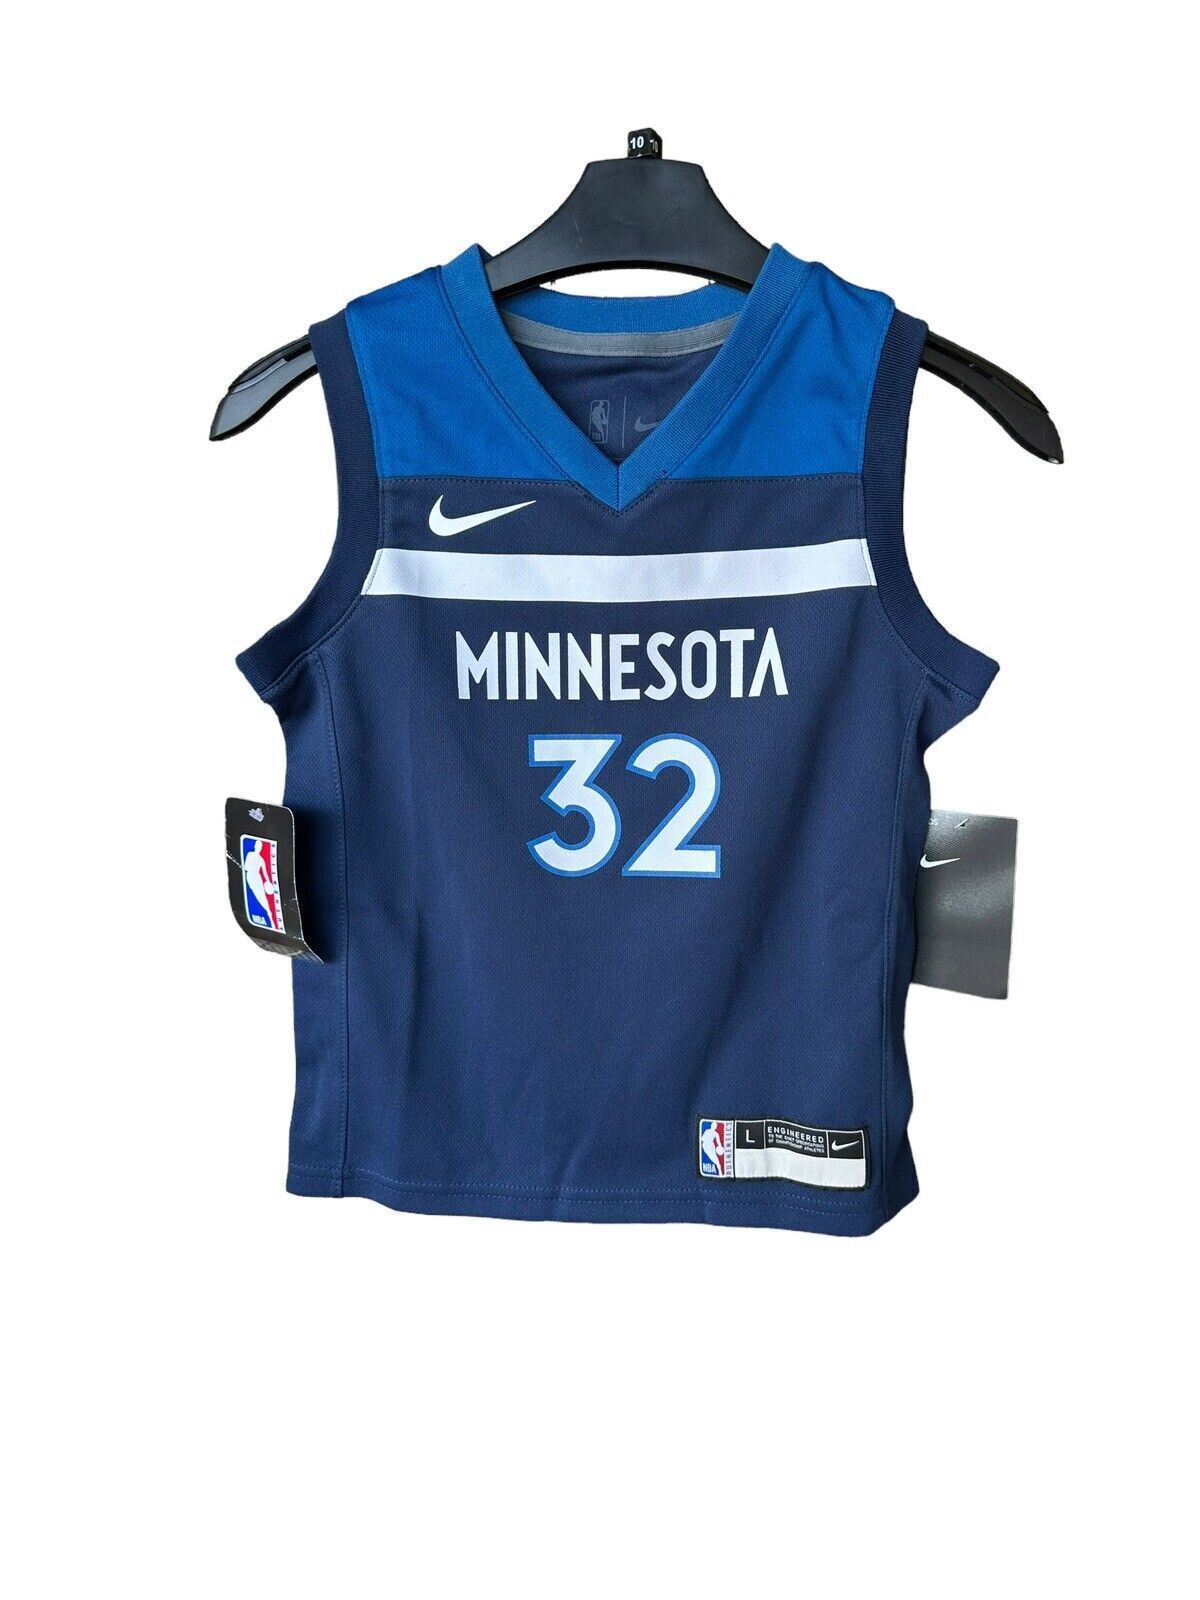 Nike NBA Minnesota Timberwolves Jersey TOWNS 32 Children’s Size 6-8 Years